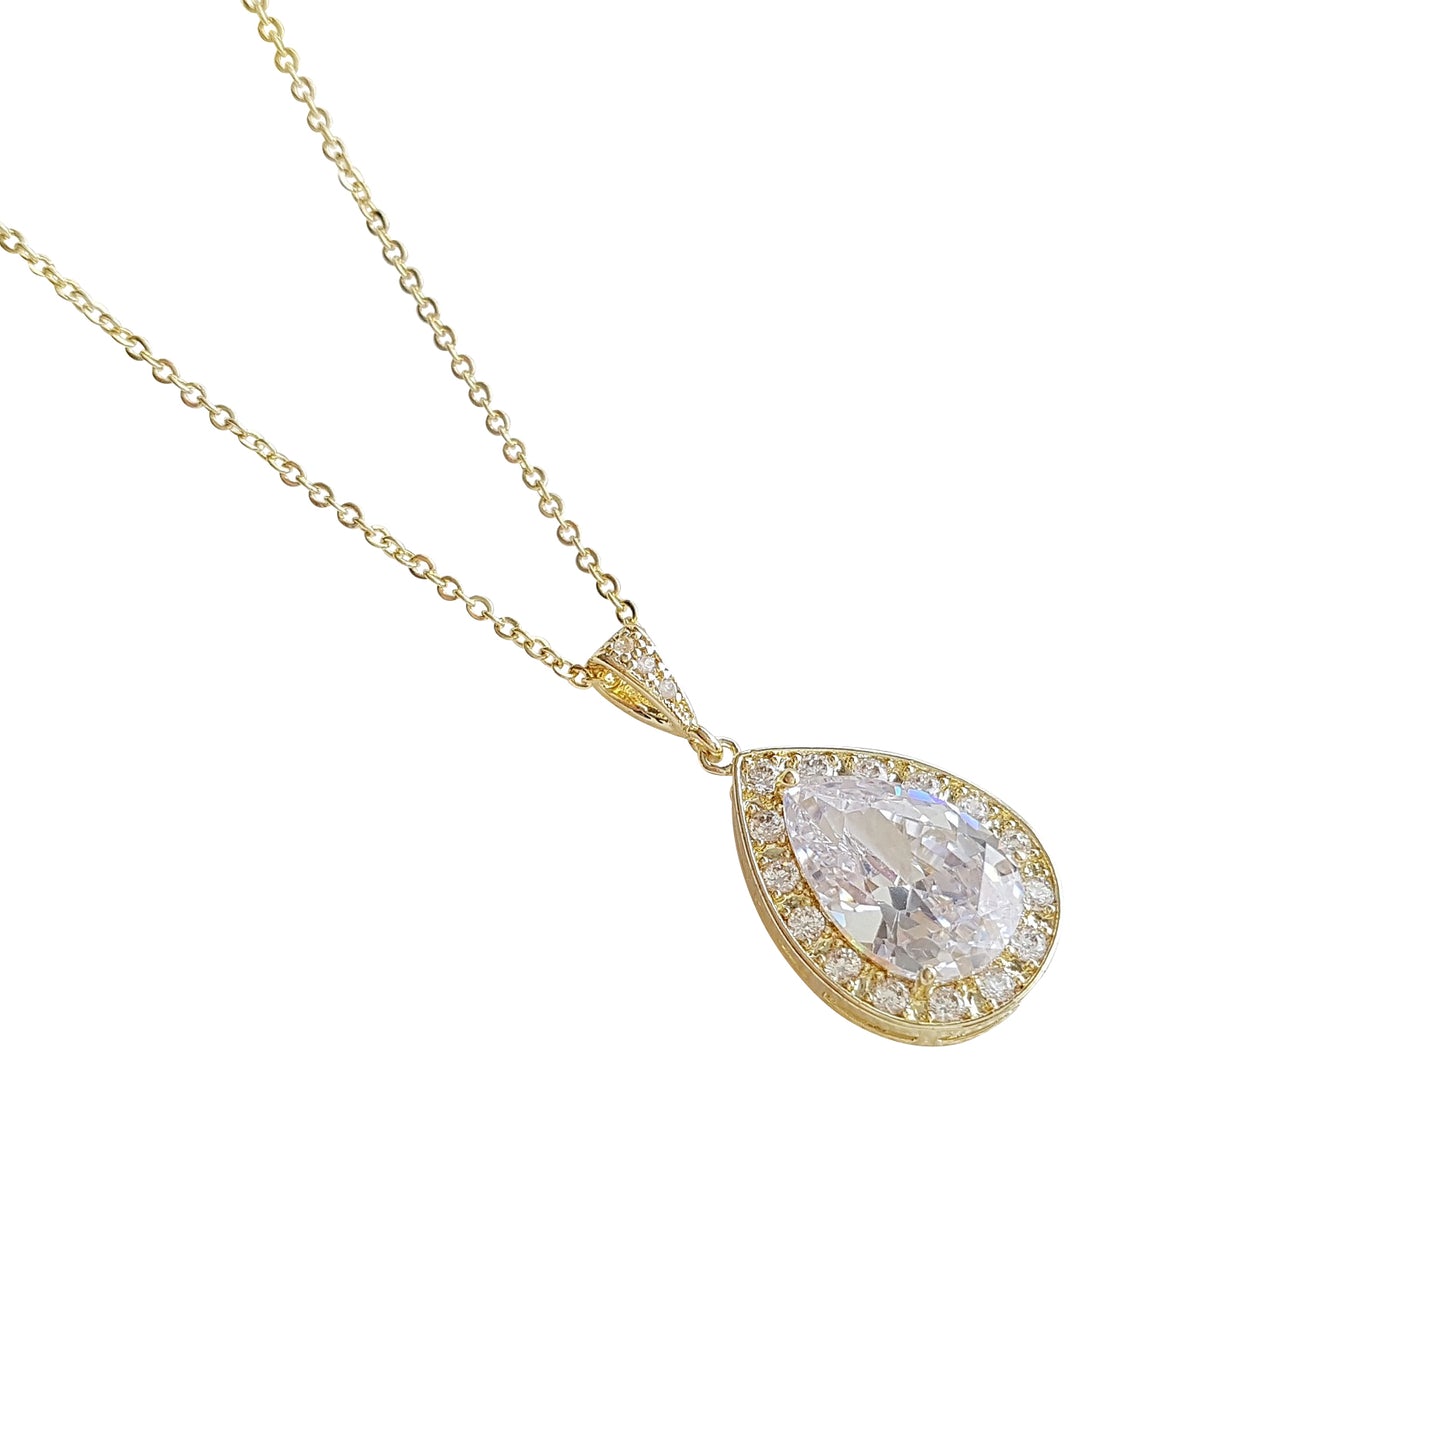 Rose Gold Teardrop Pendant Necklace for Brides & Bridesmaids-Evelyn